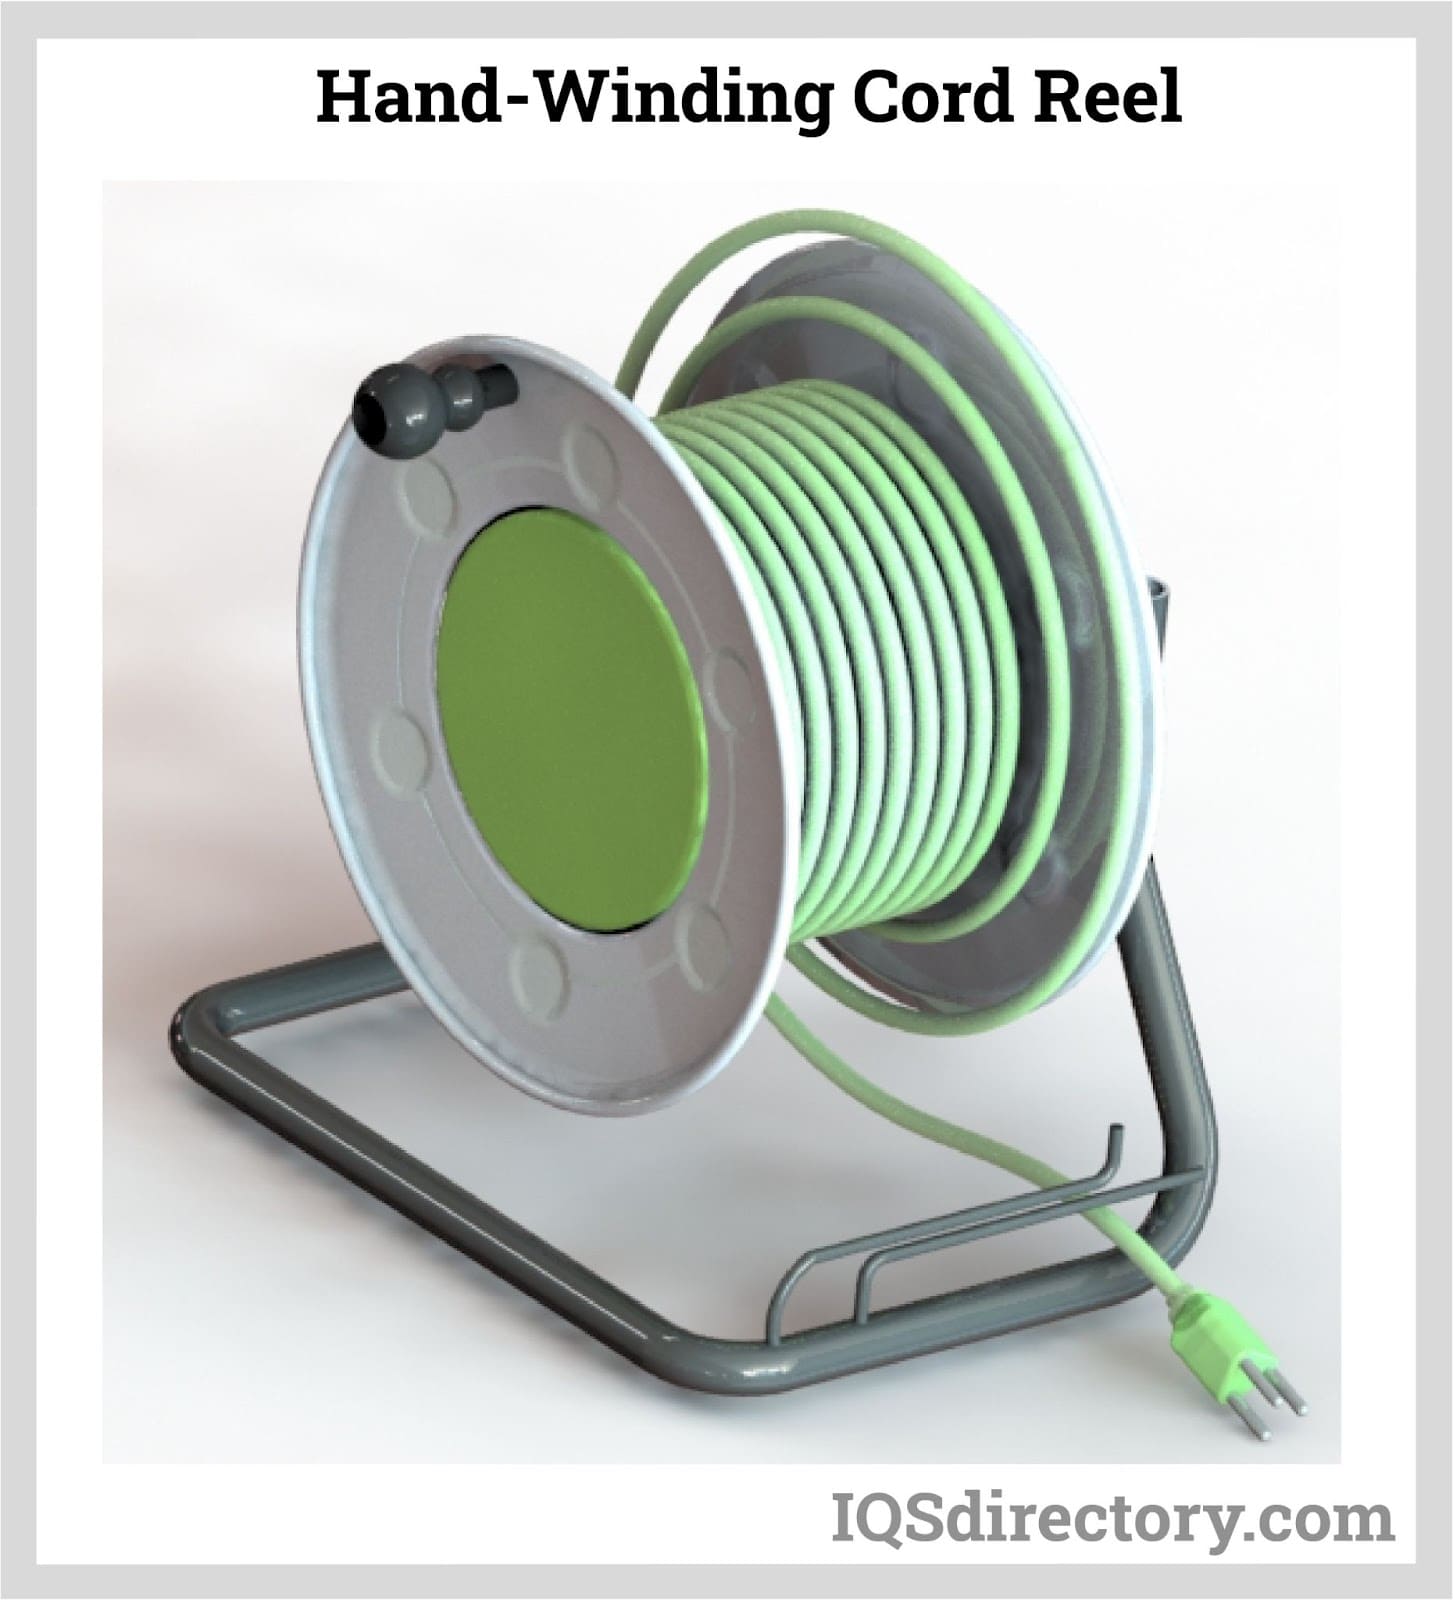 Rope or Electrical Cord Reel